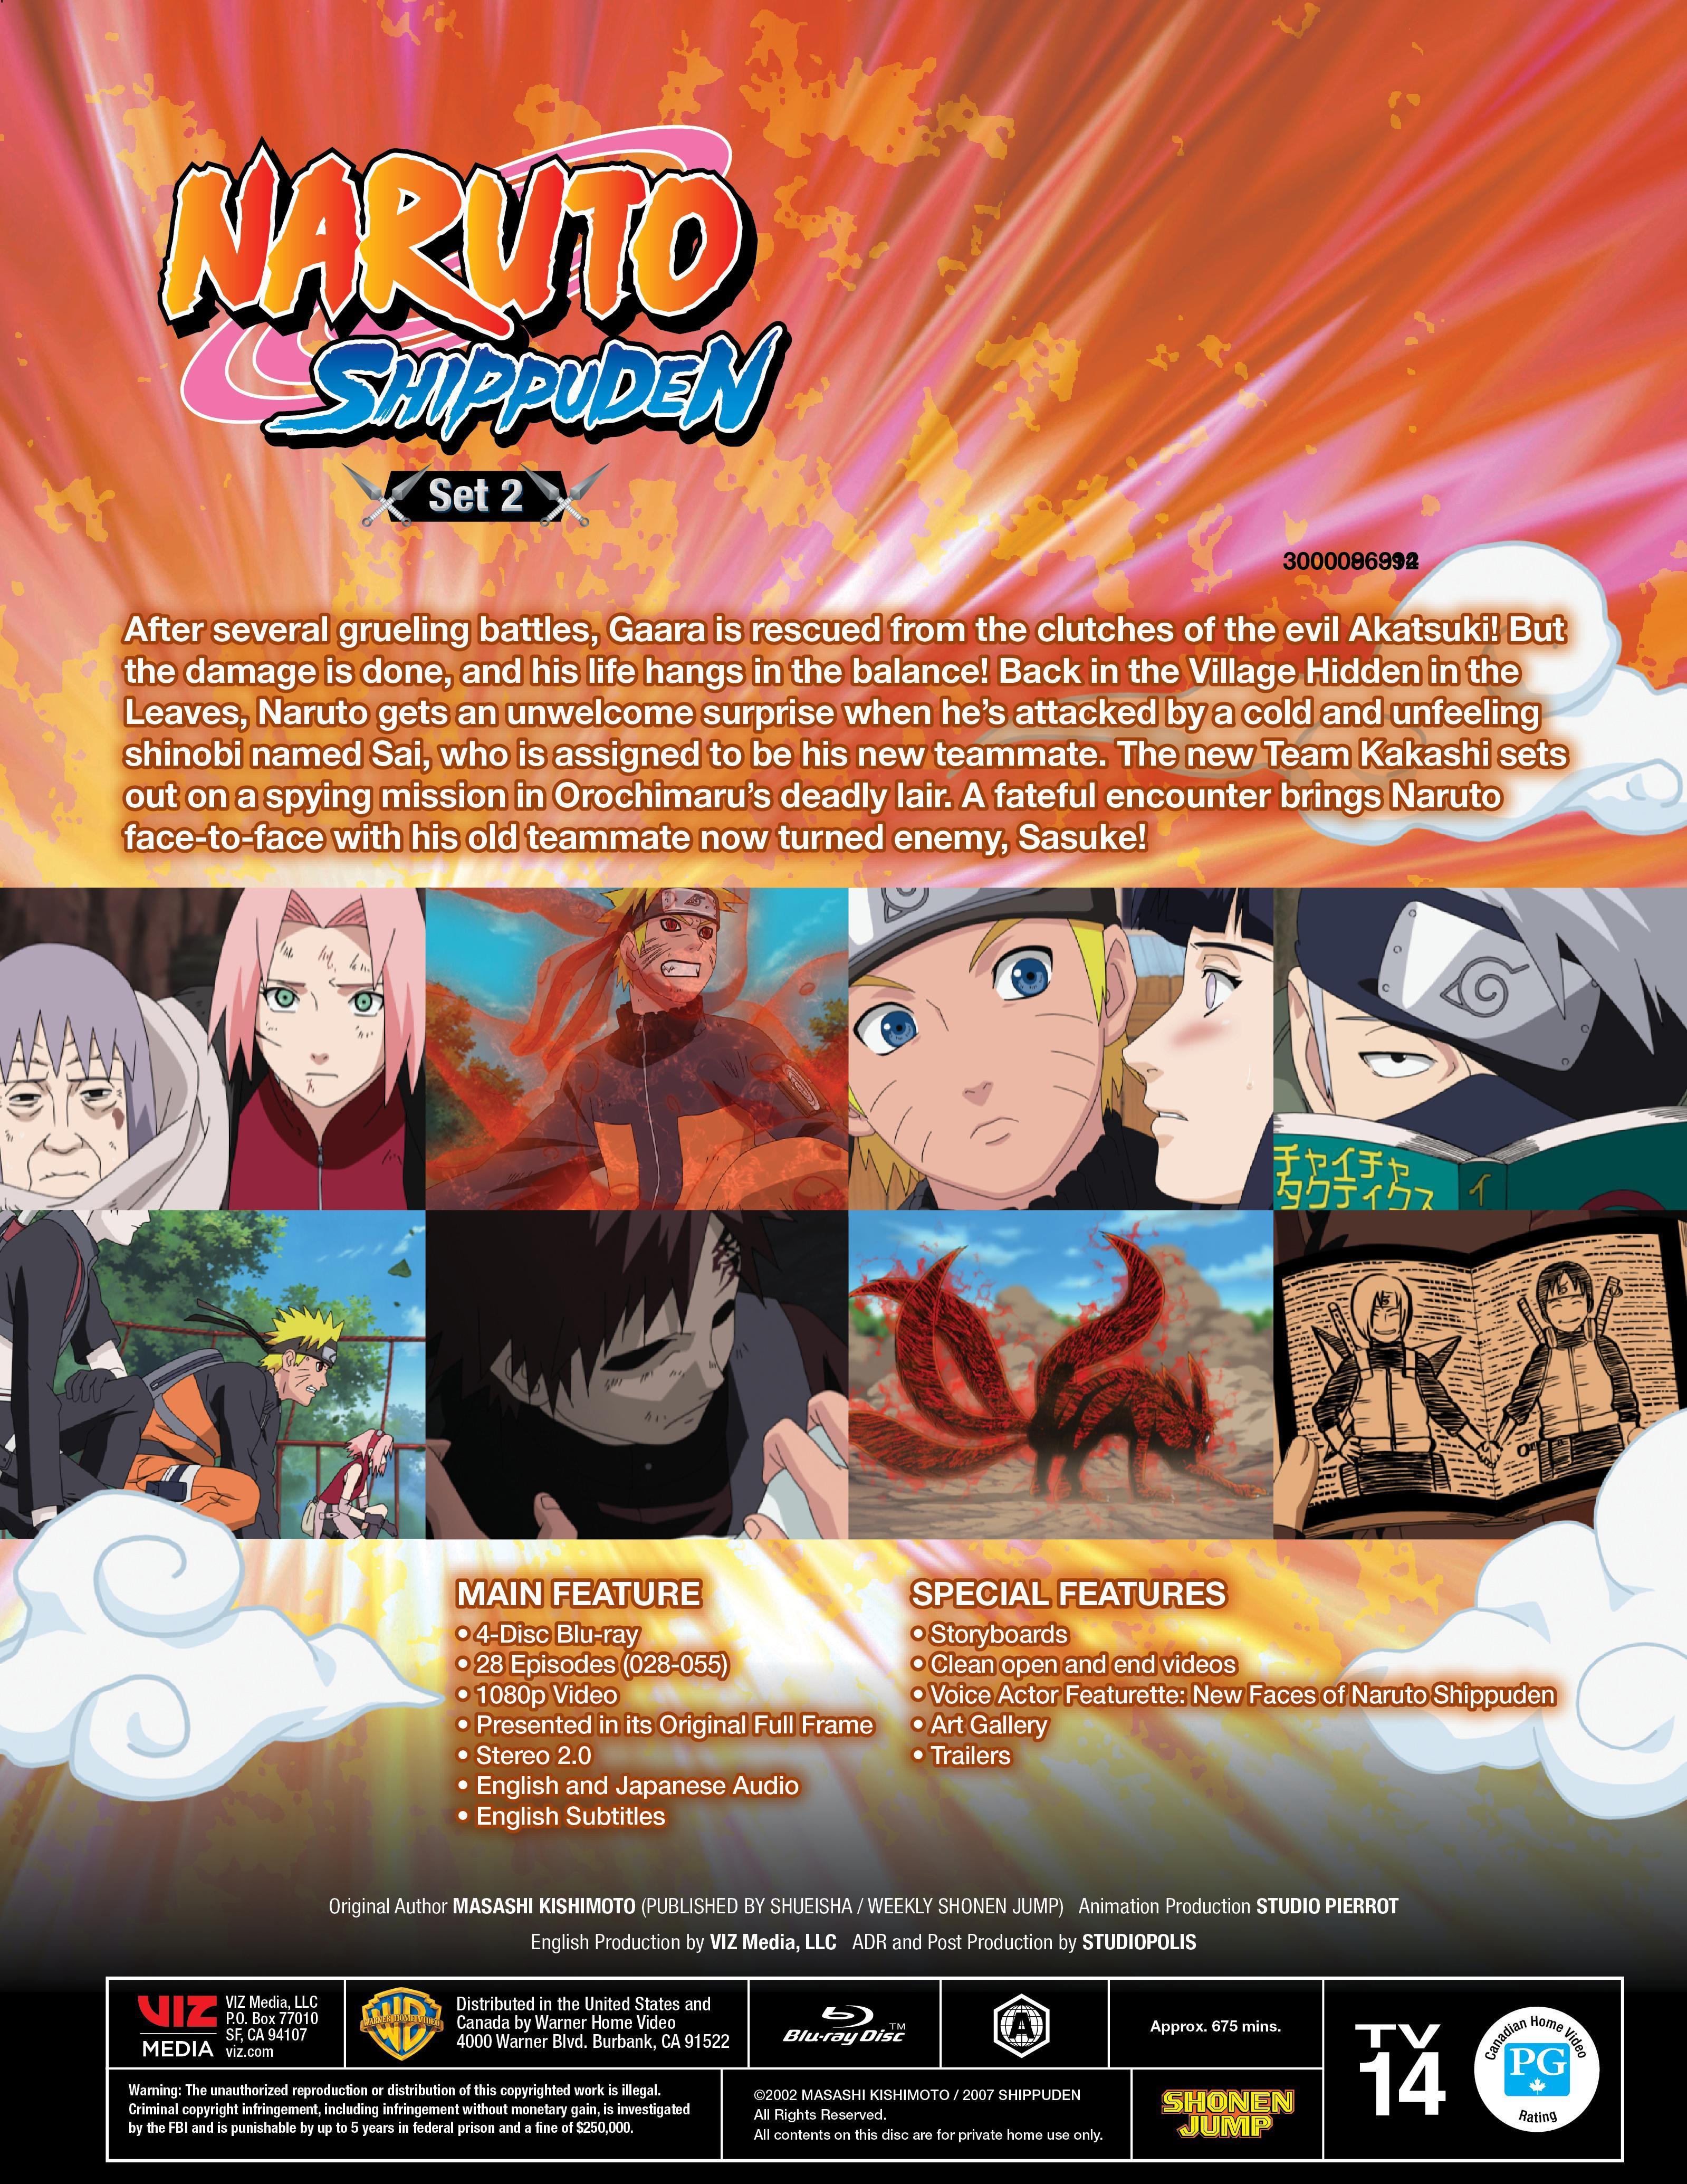 Naruto Shippuden - Set 2 - Blu-ray image count 1